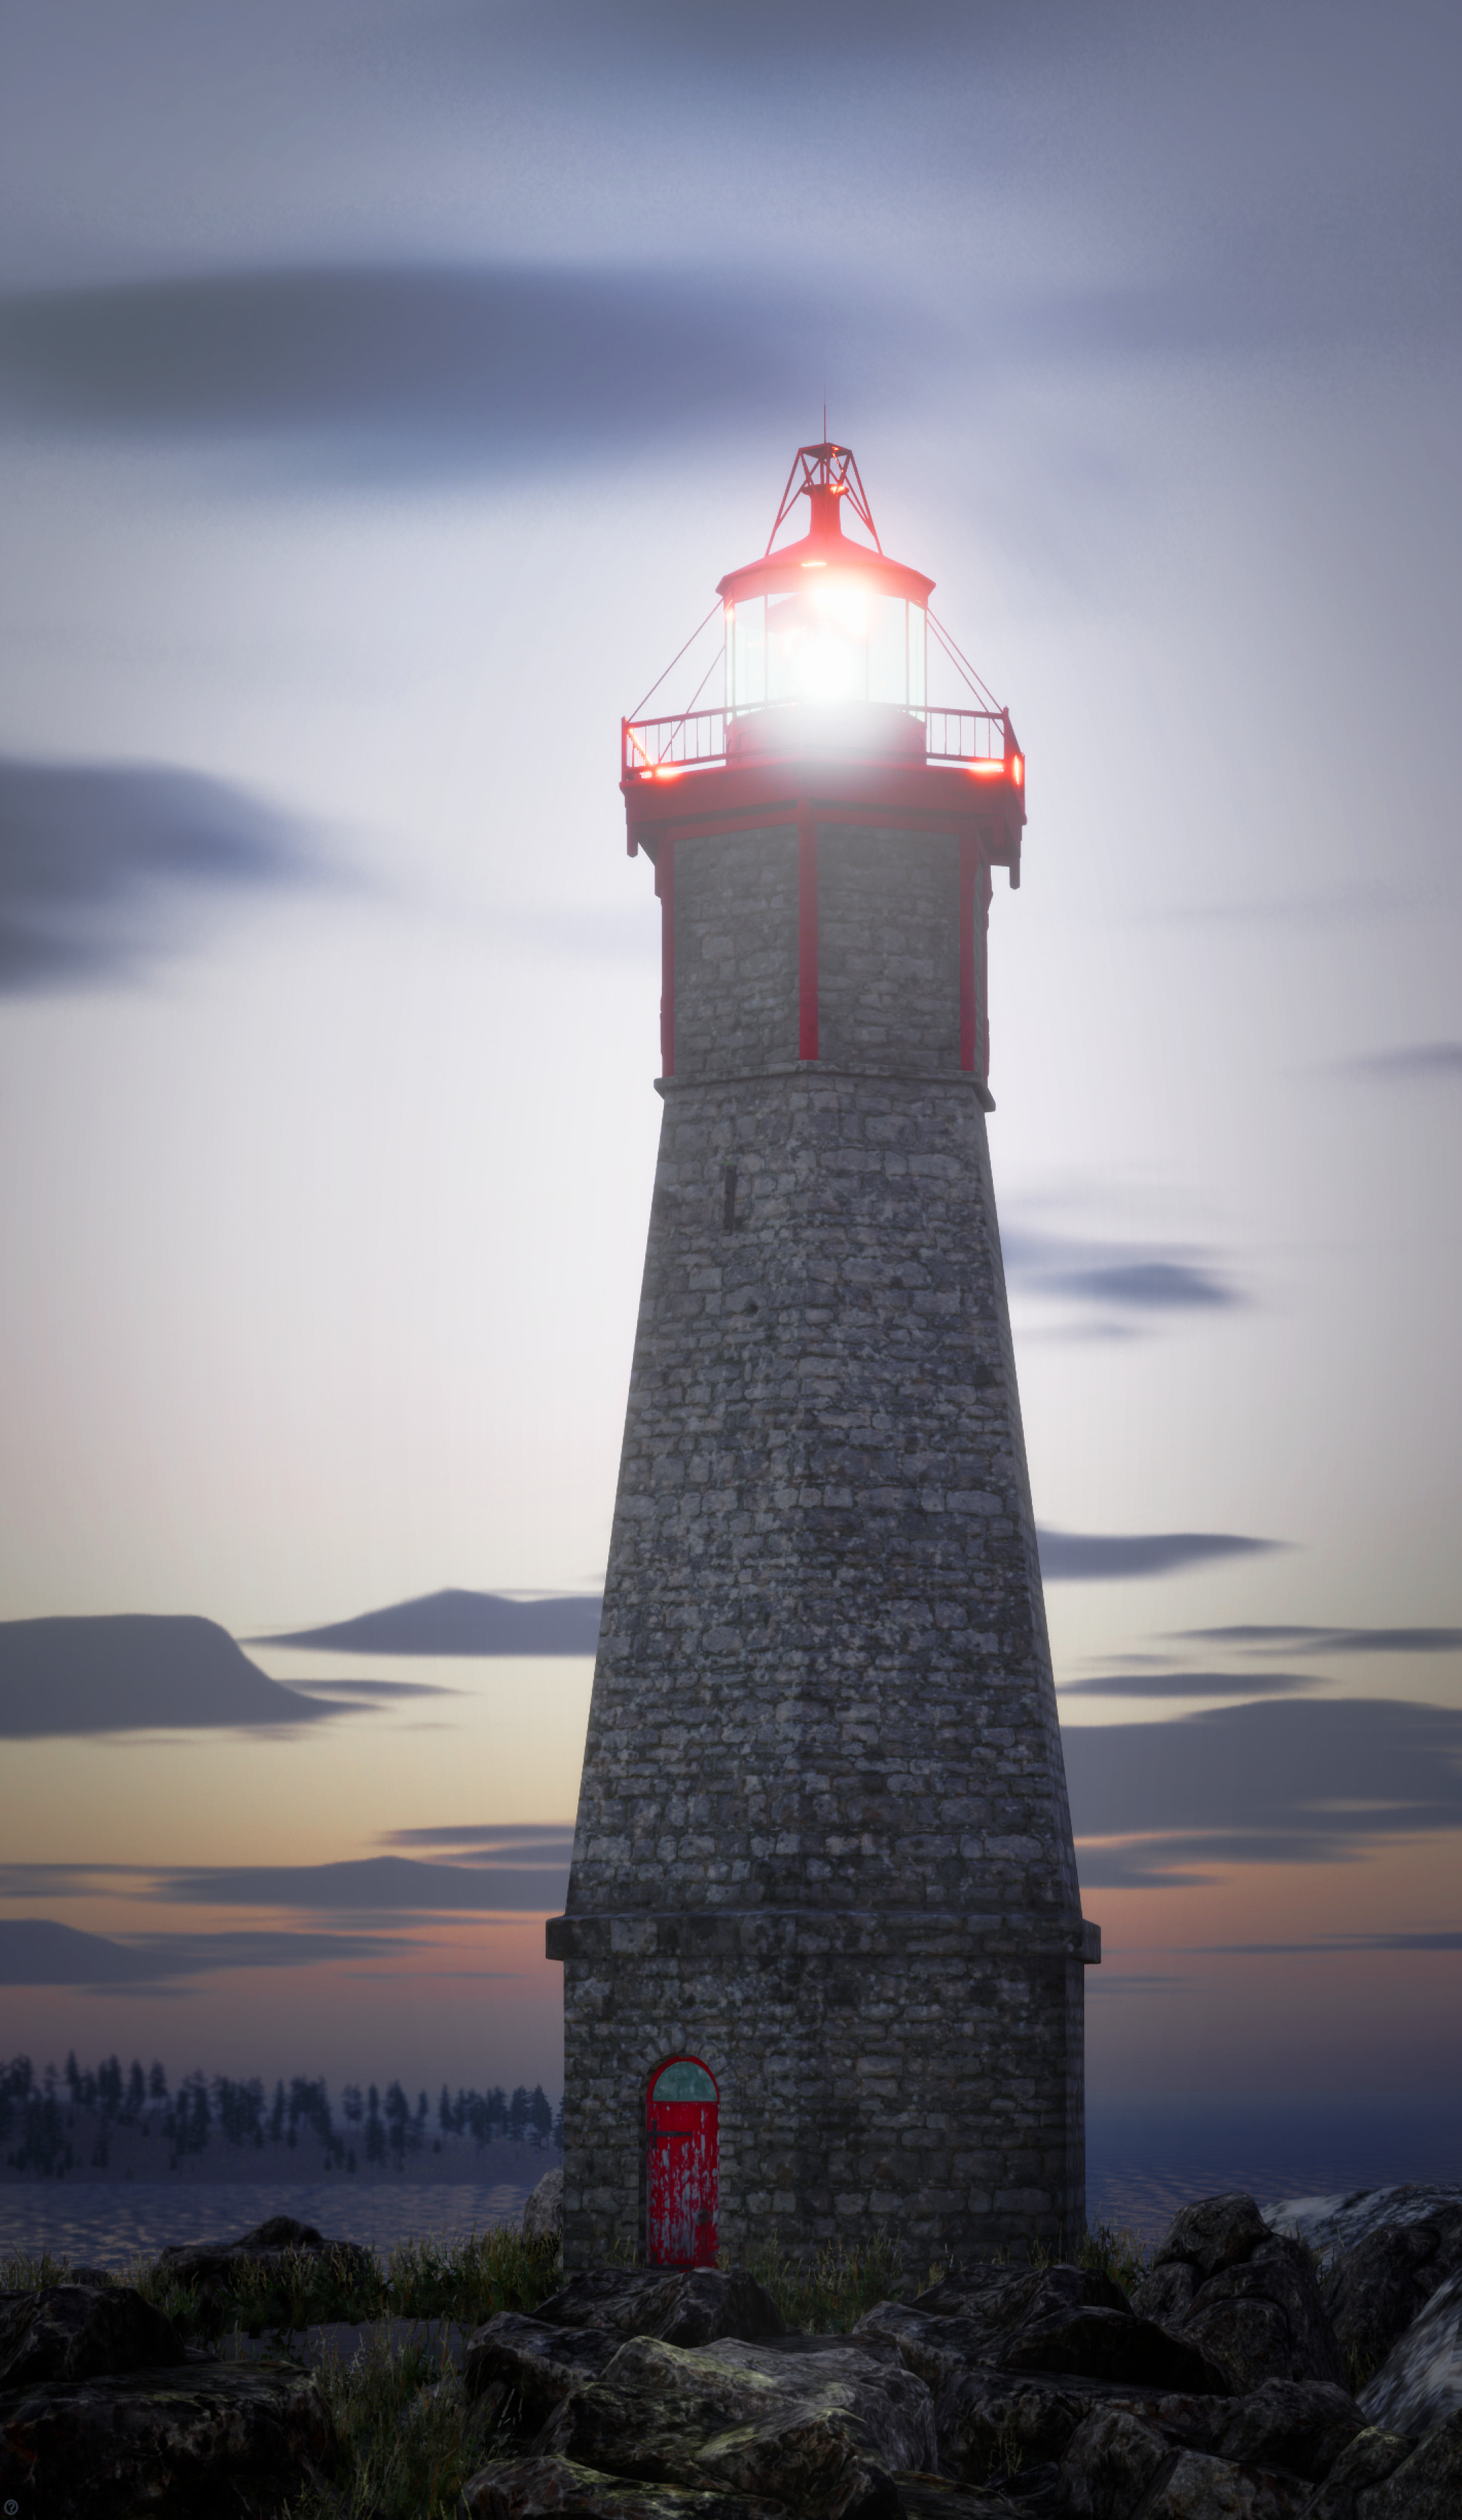 Lighthouse 3D model inspired by Gibraltar Point Lighthouse, Toronto. UE4 screen capture